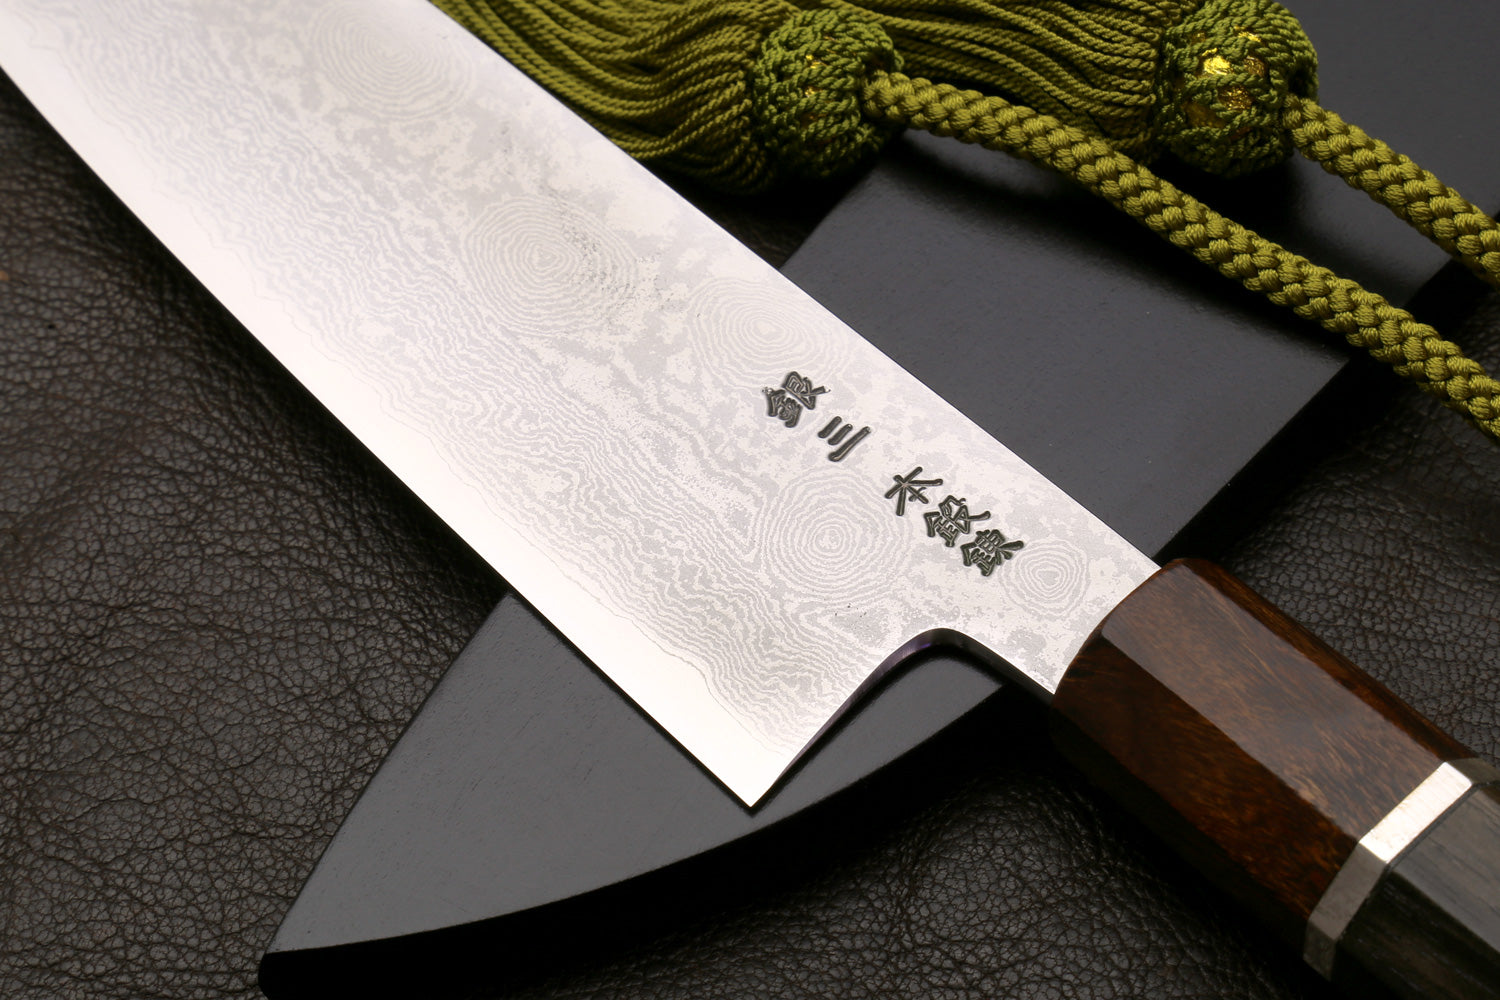 Signature 5-inch Santoku Knife – Aikido Steel